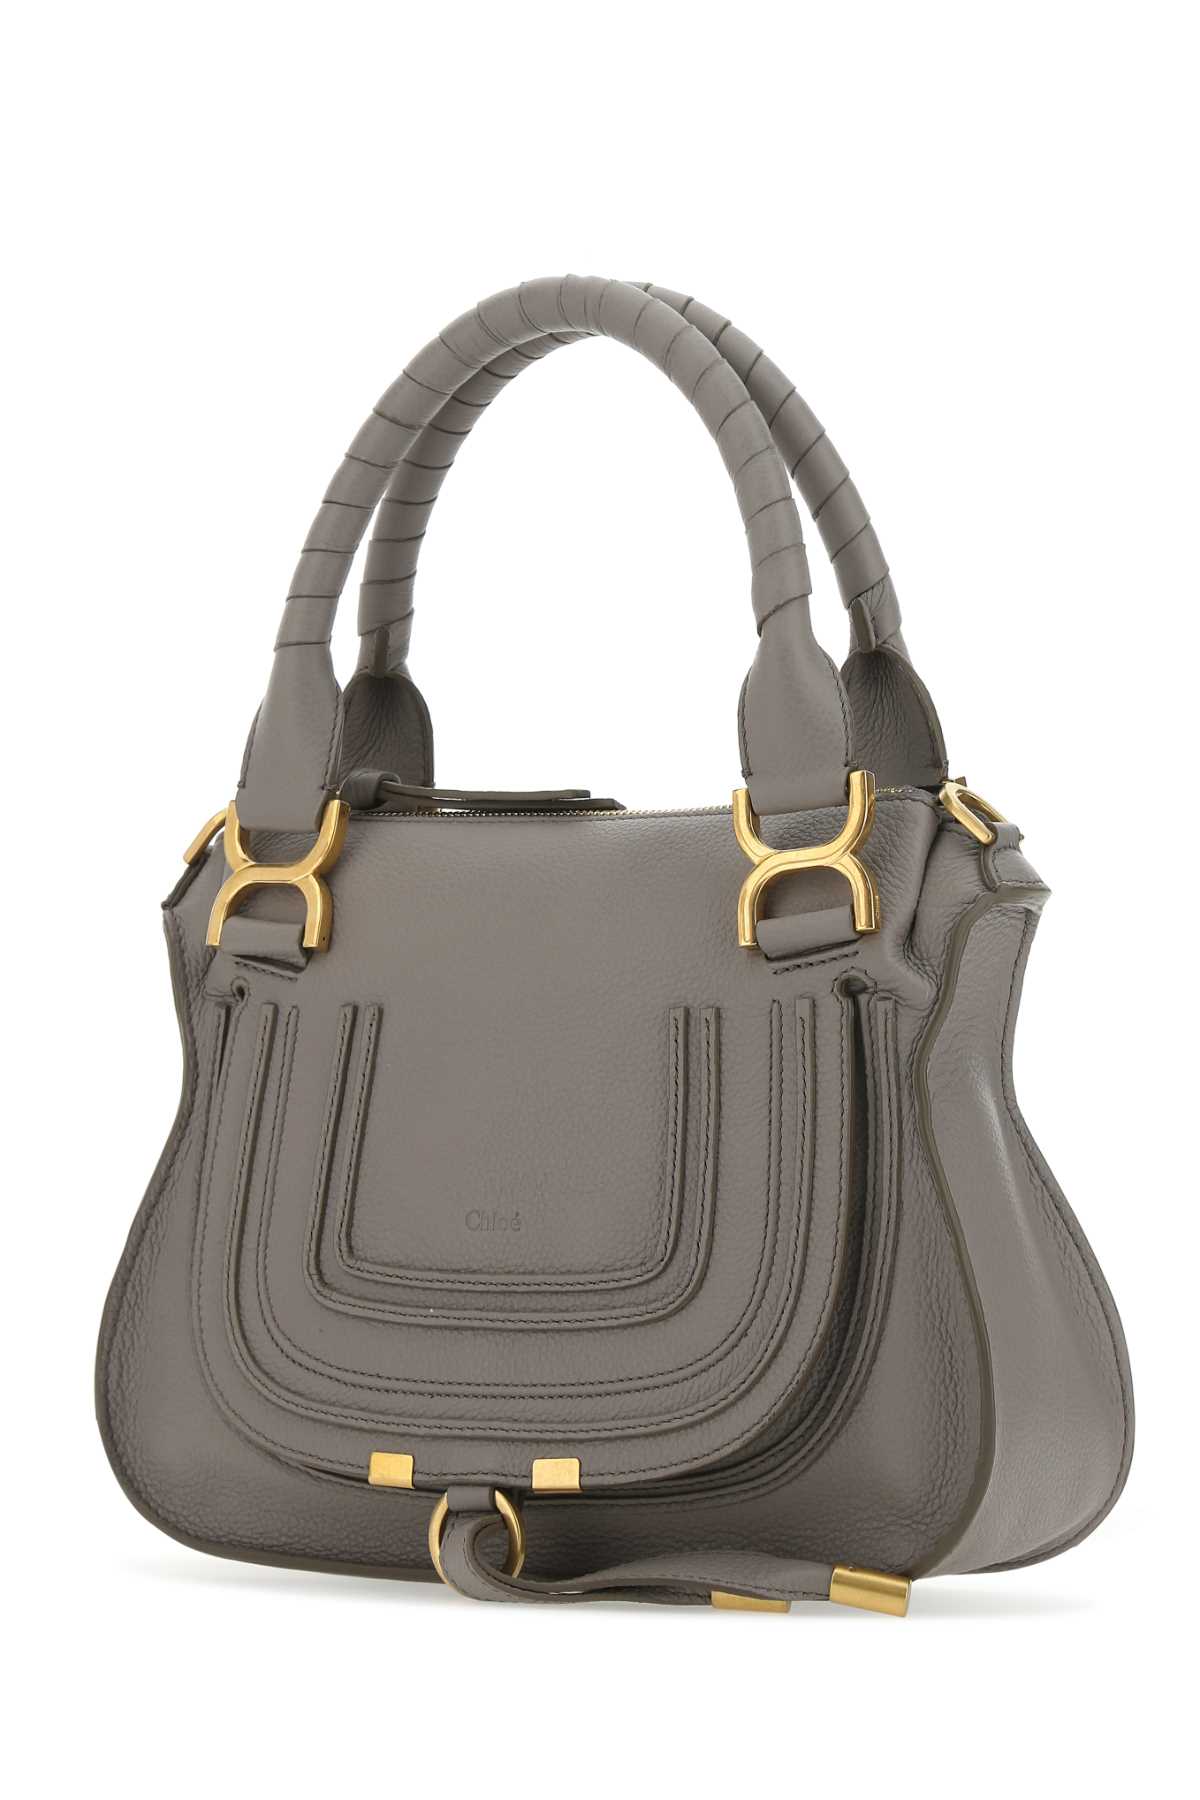 Chloé Grey Leather Small Marcie Handbag In 053